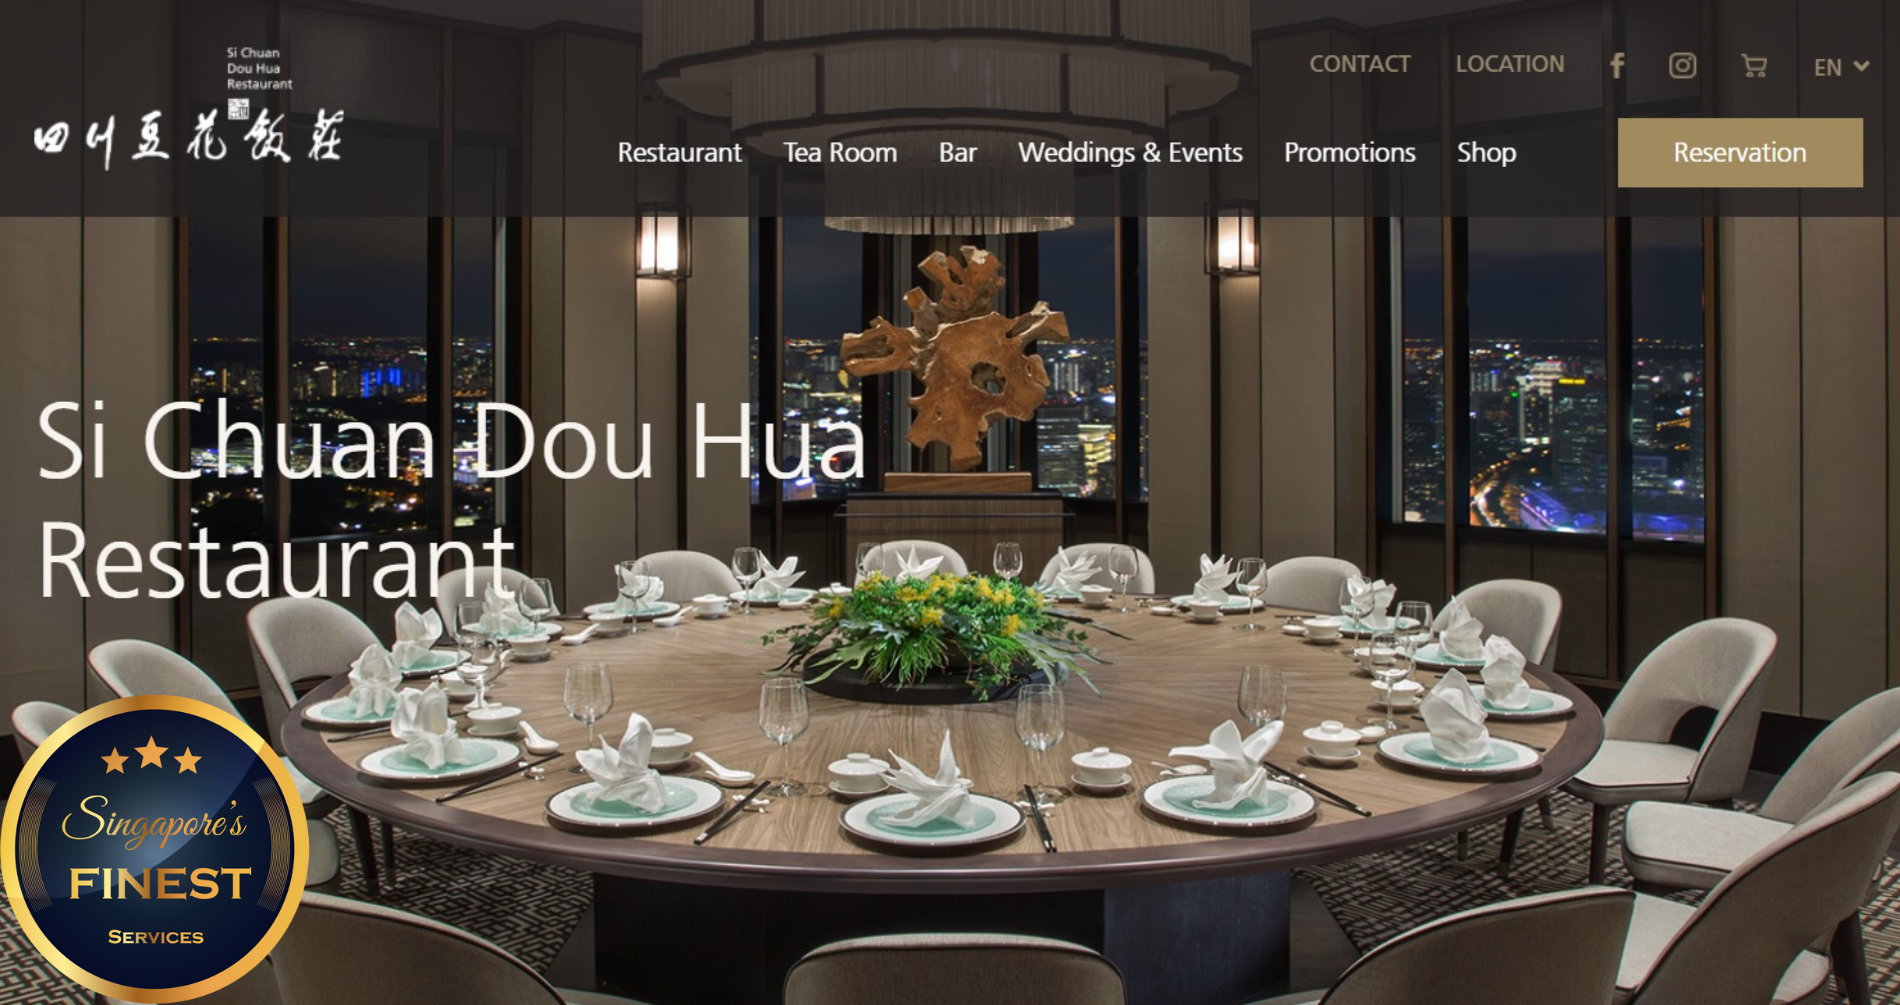 Si Chuan Dou Hua - Chinese Restaurant Singapore